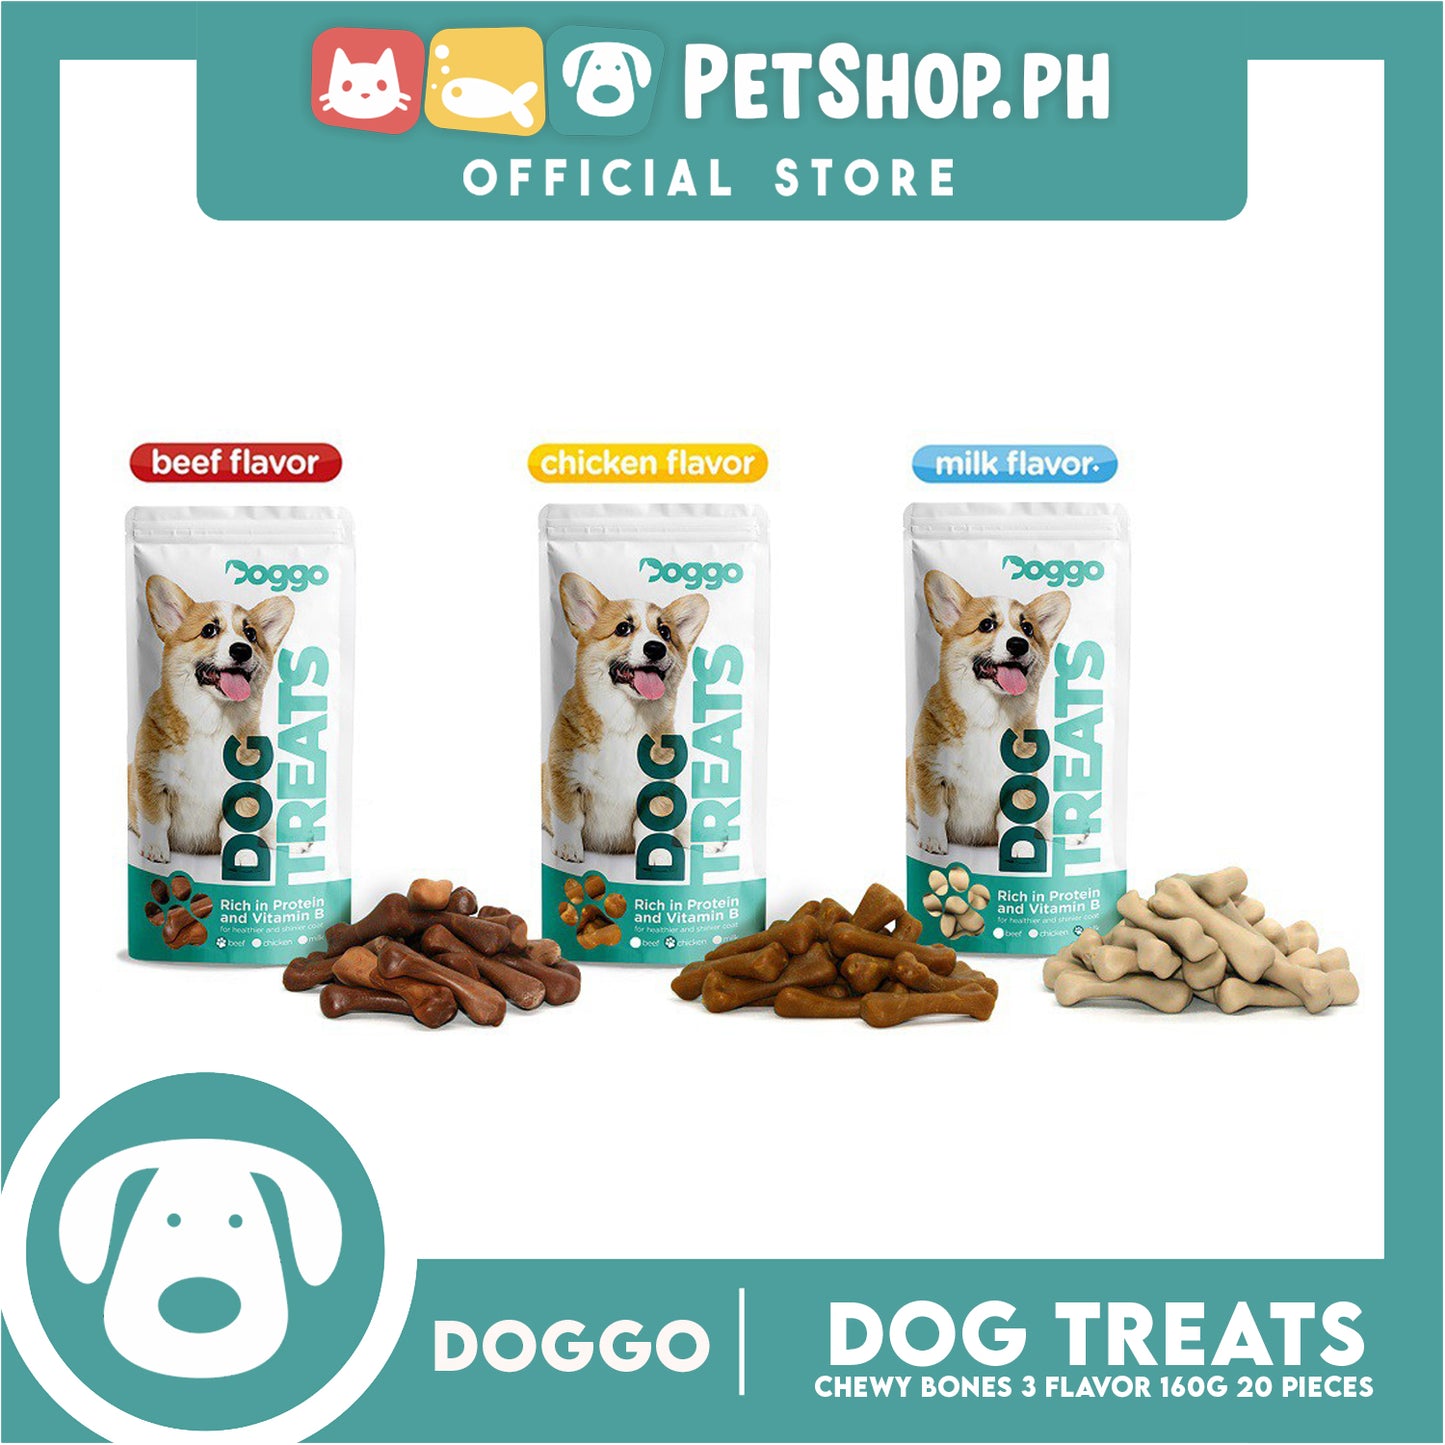 Doggo Dog Treats Chewy Bones 160 grams, 20 pcs. (Milk Flavor) Treats for Your Dog